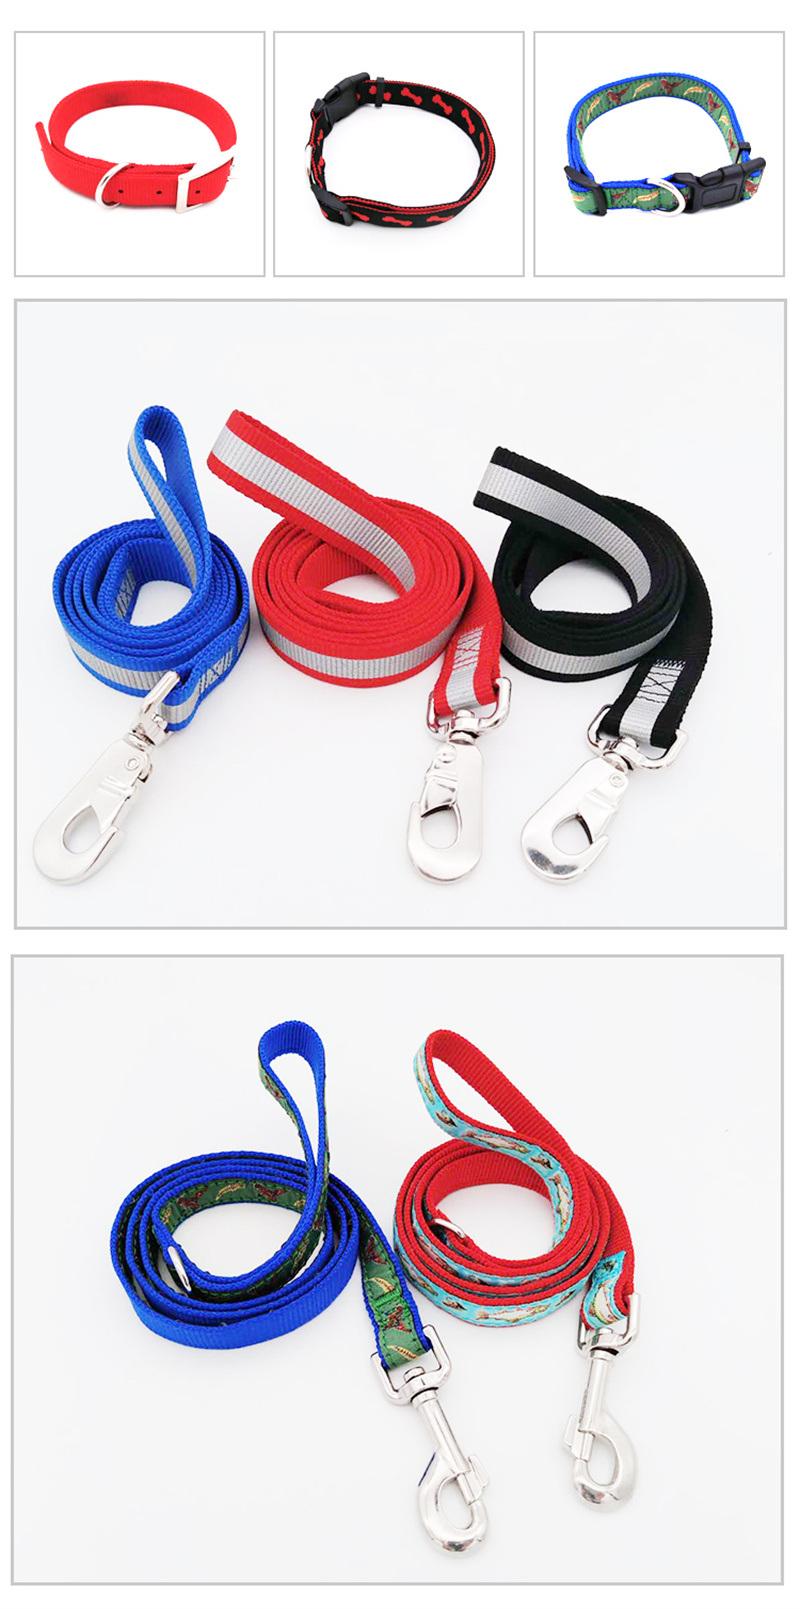 Adjustable Metal Buckle Eco-Friendly Colorful Nylon Pet Dog Collar